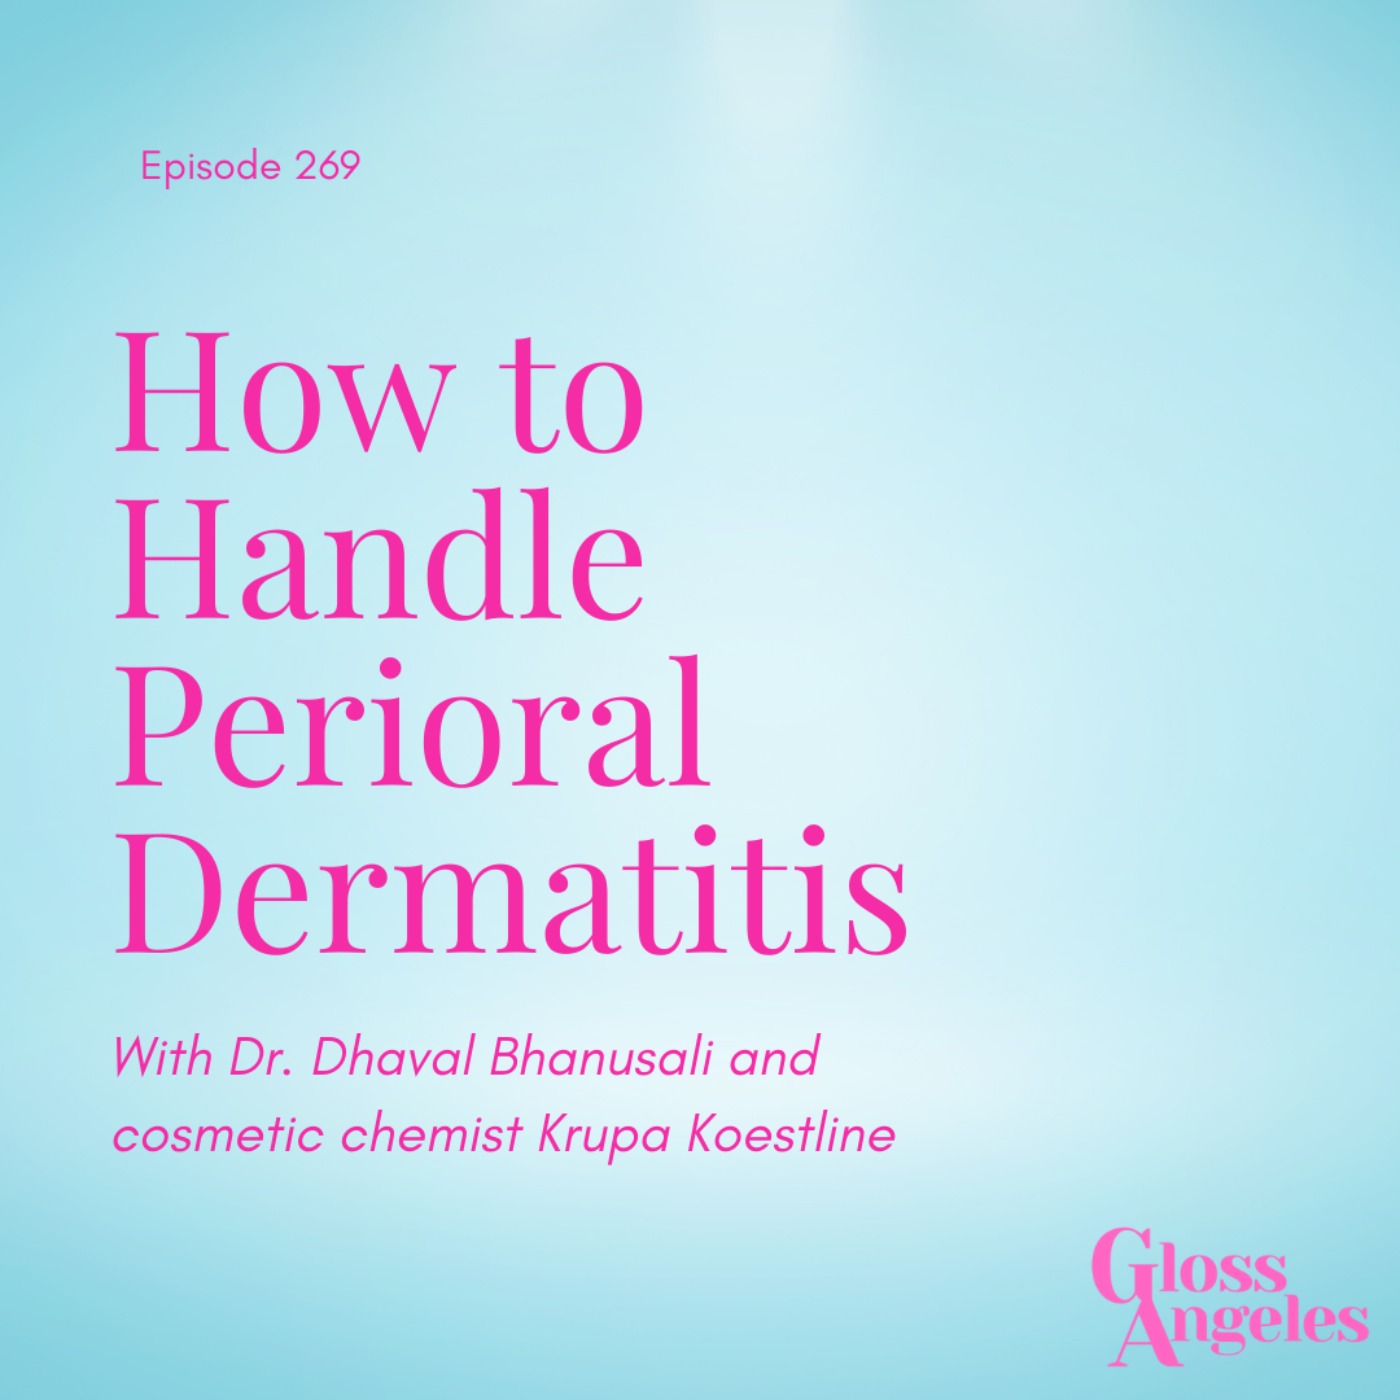 How to Handle Perioral Dermatotis With Dr. Dhaval Bhanusali and Krupa Koestline